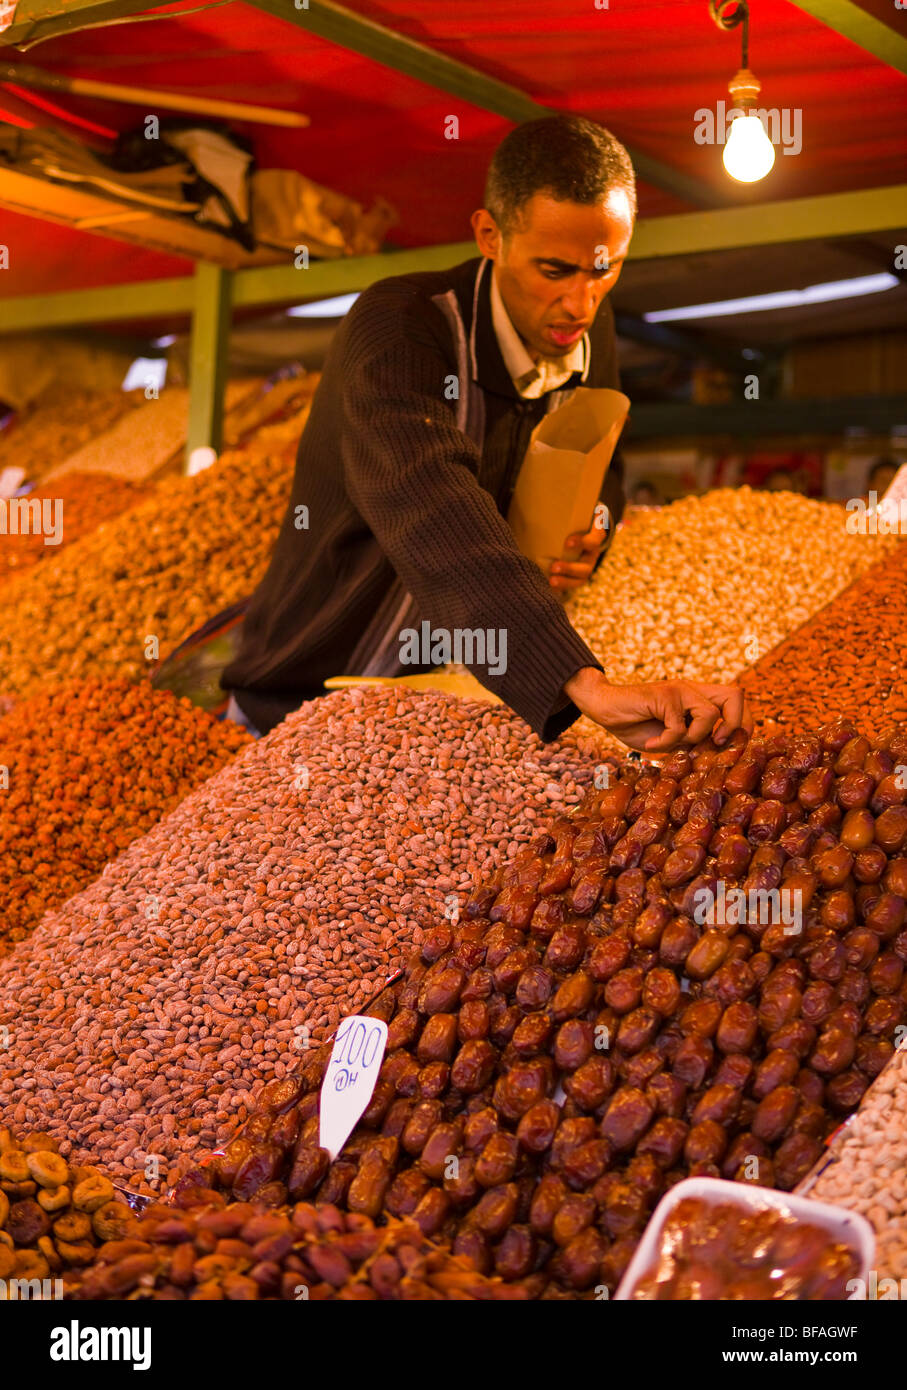 Marrakesch, Marokko - Obst- und Nussbäumen Anbieter auf Djemaa el Fna Platz. Stockfoto